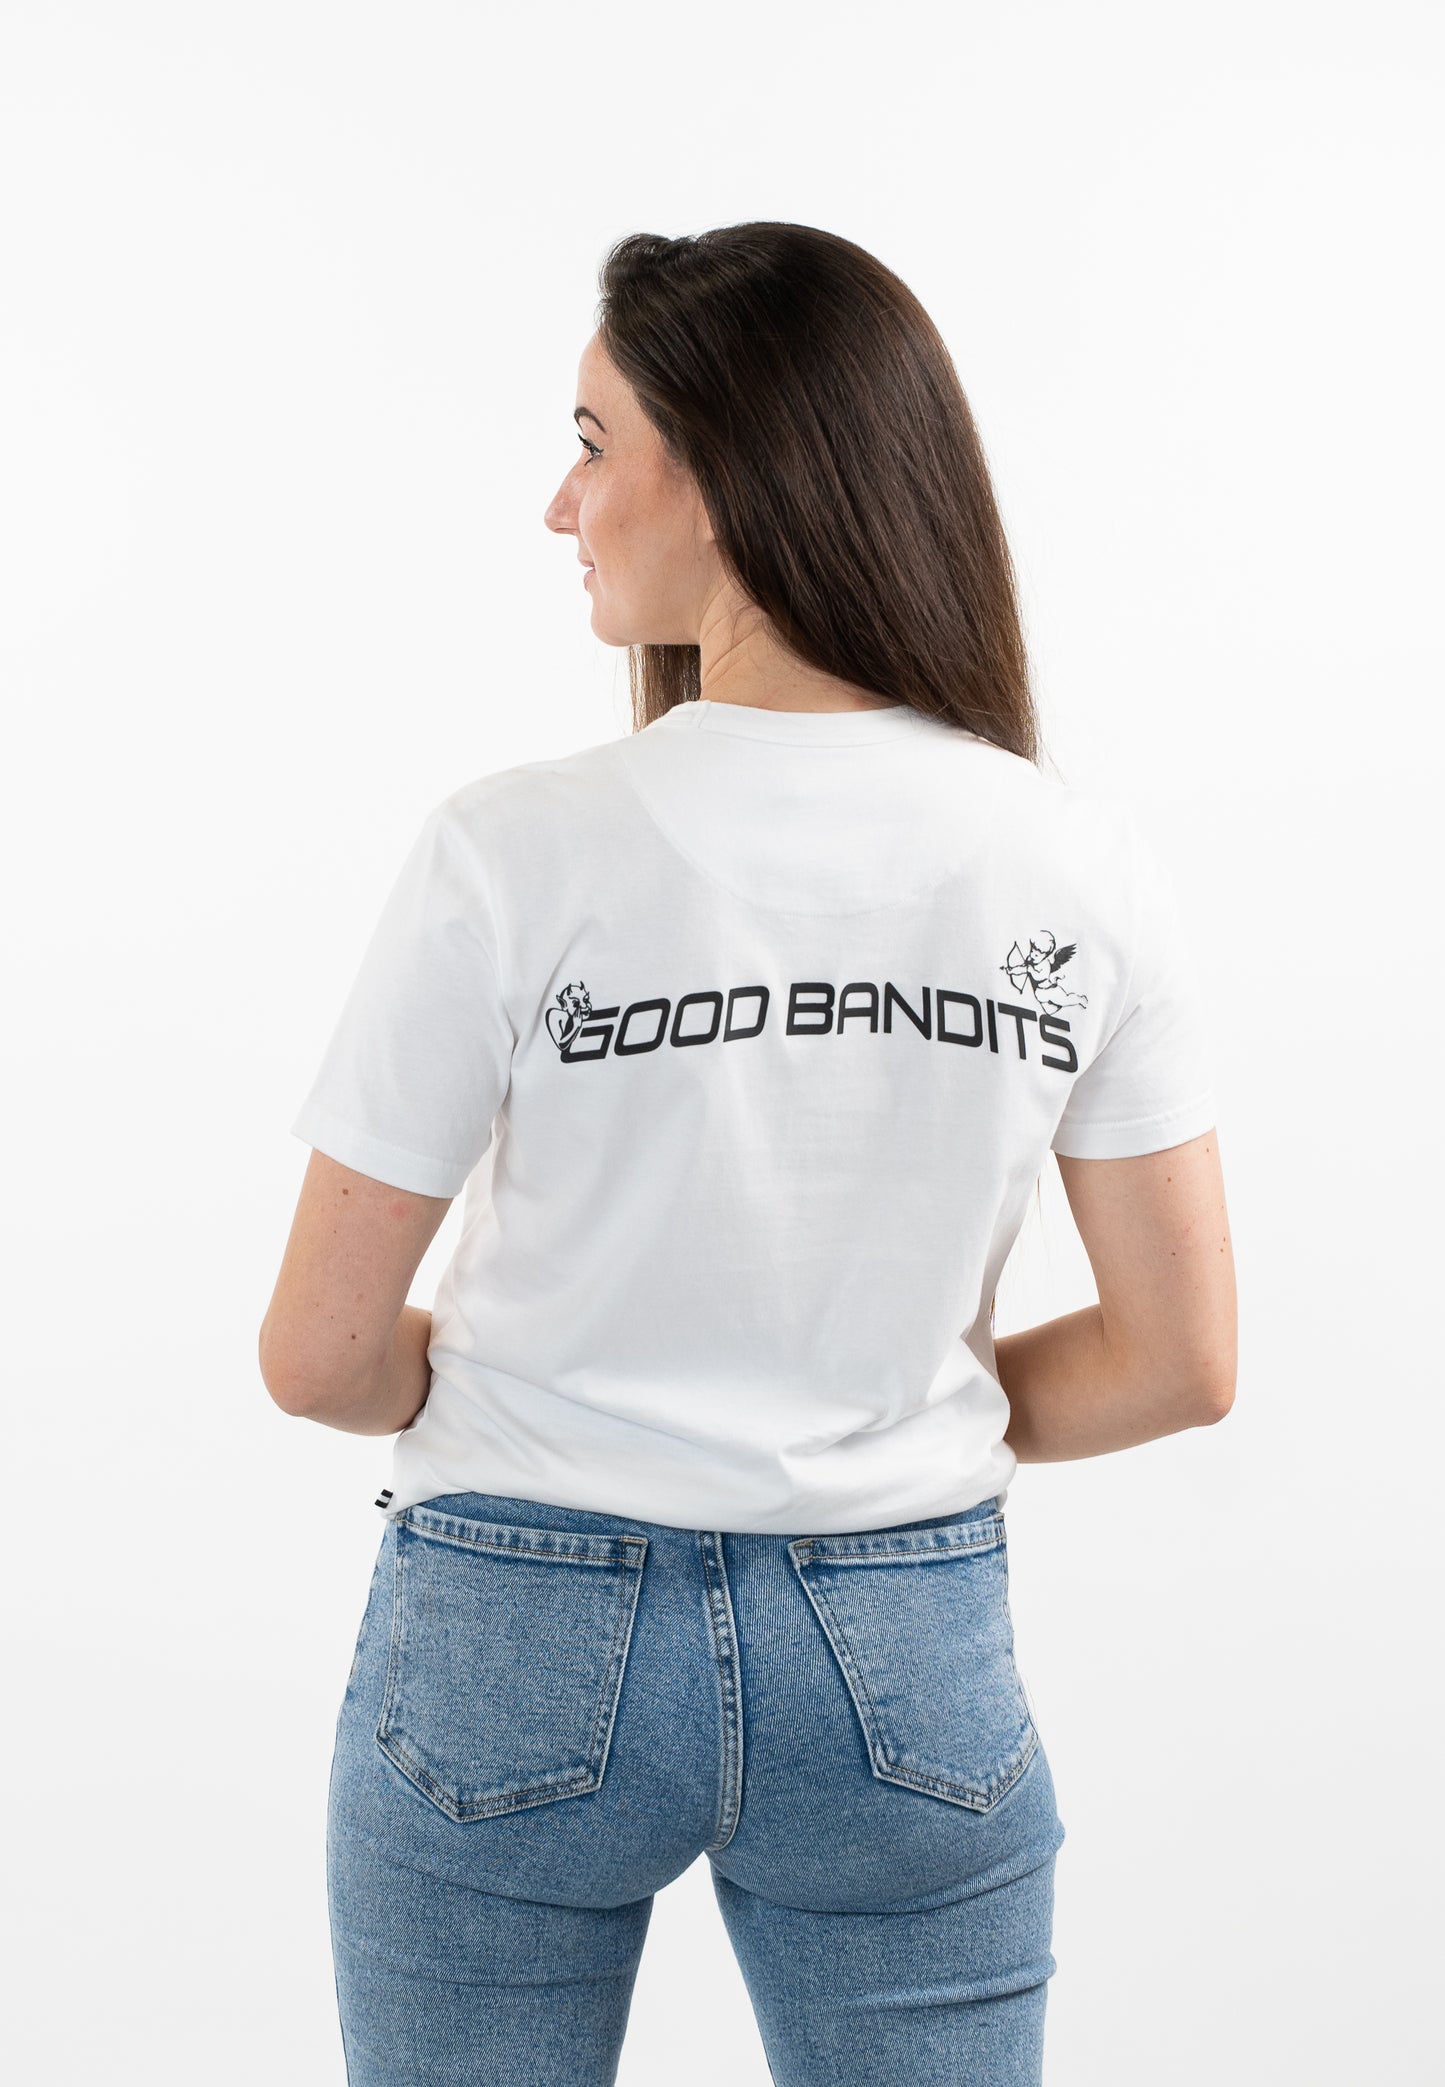 Good Bandits™ Organic T-shirt - Dangel - White/Black